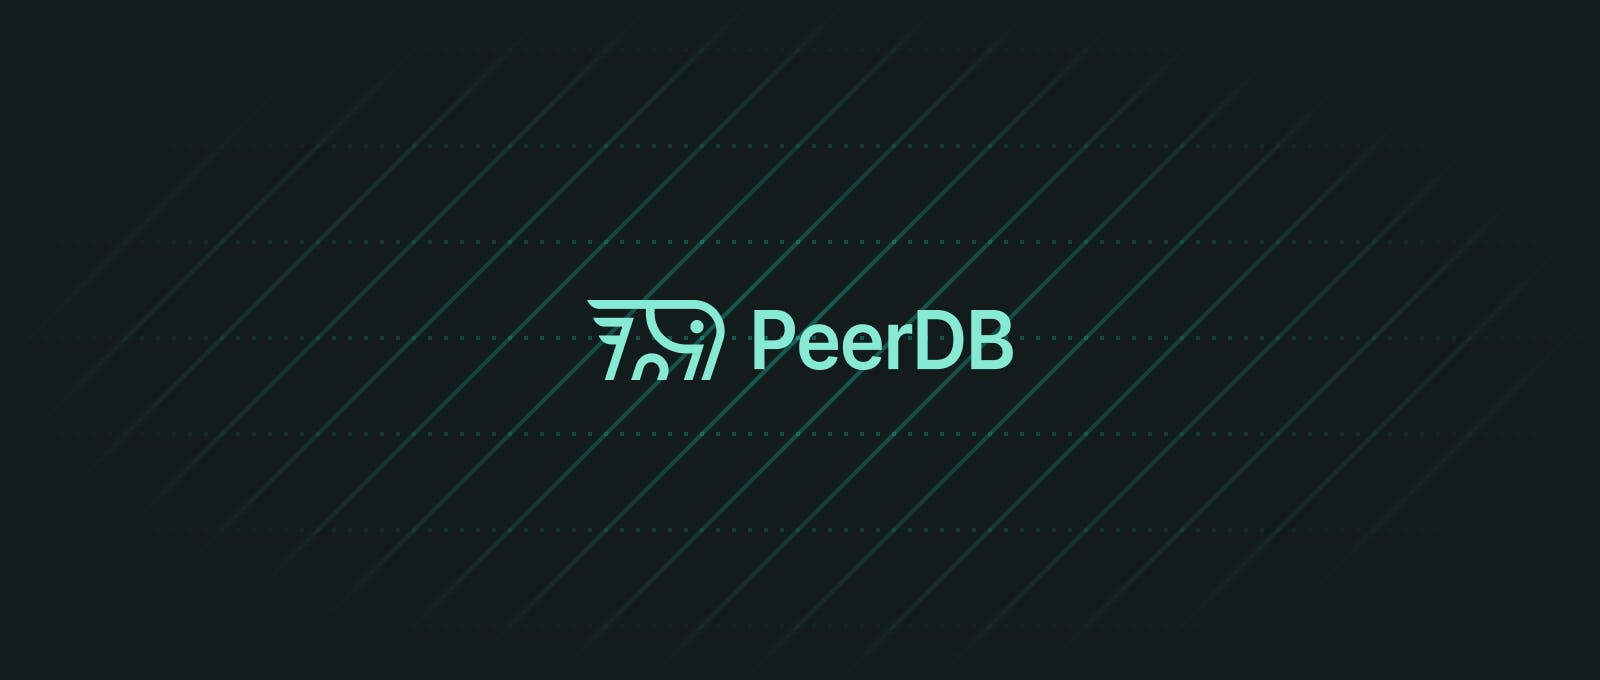 PeerDB raises $3.6 million seed funding to revolutionize data movement for PostgreSQL